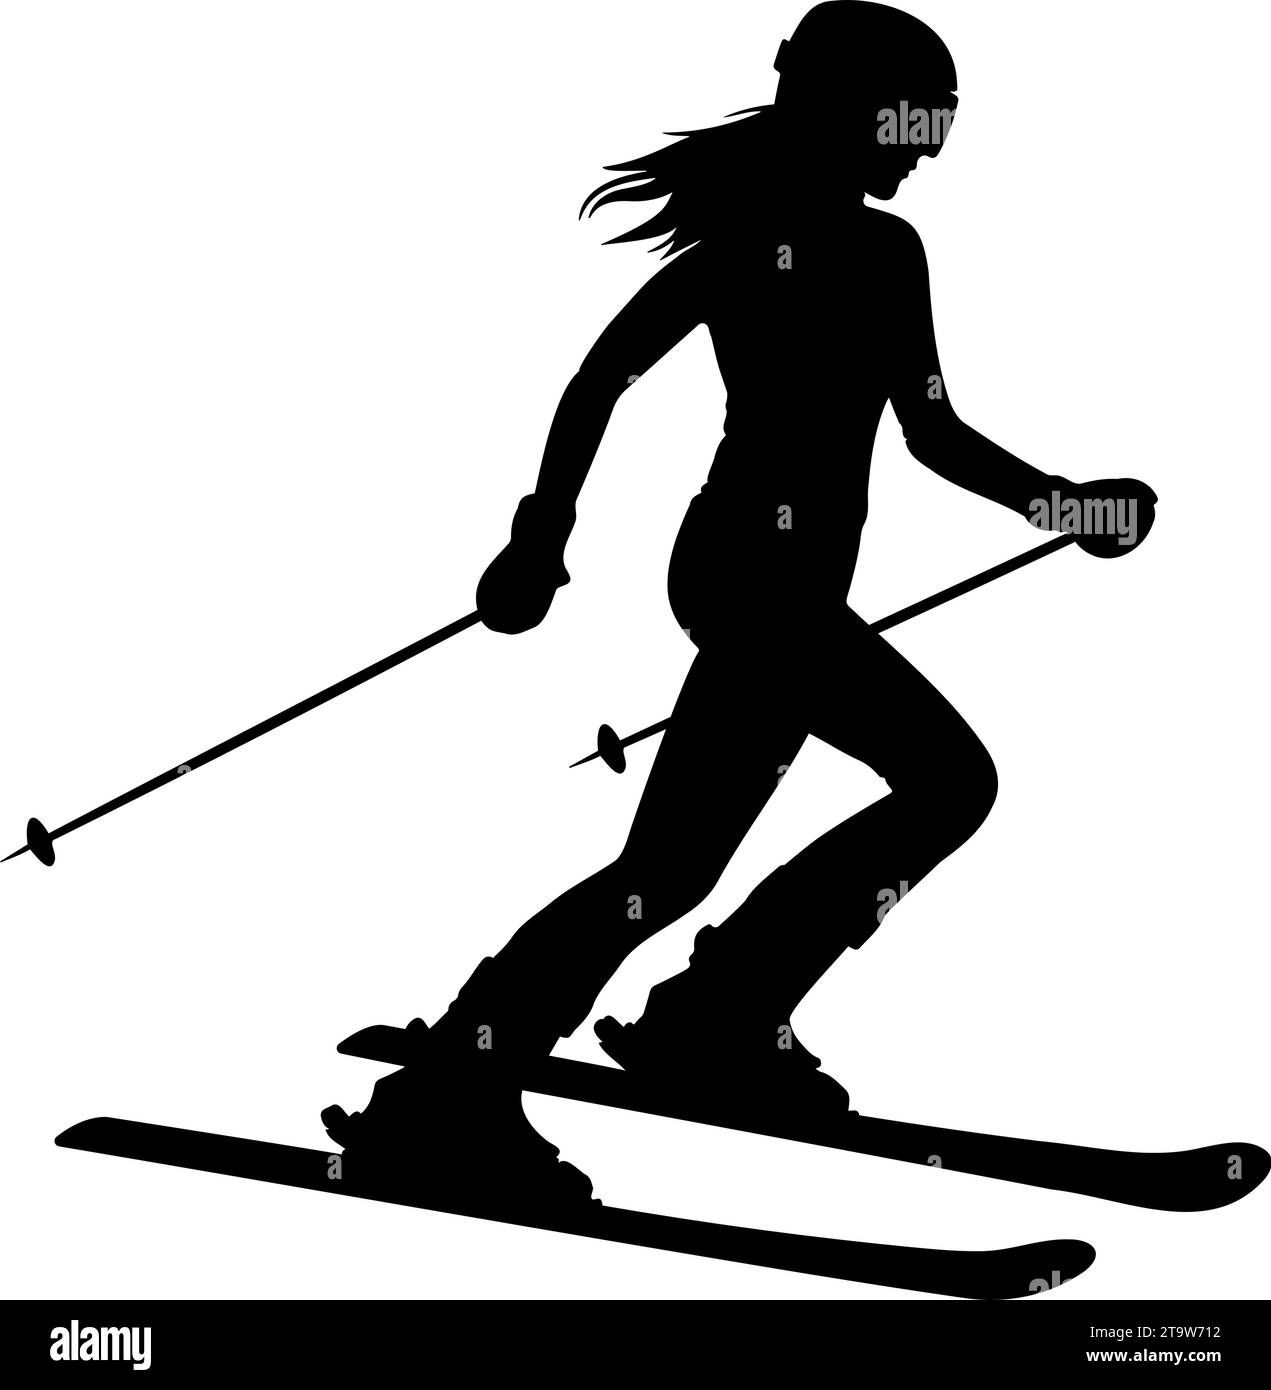 Female Skier in action silhouette. Vector illustration Stock Vector